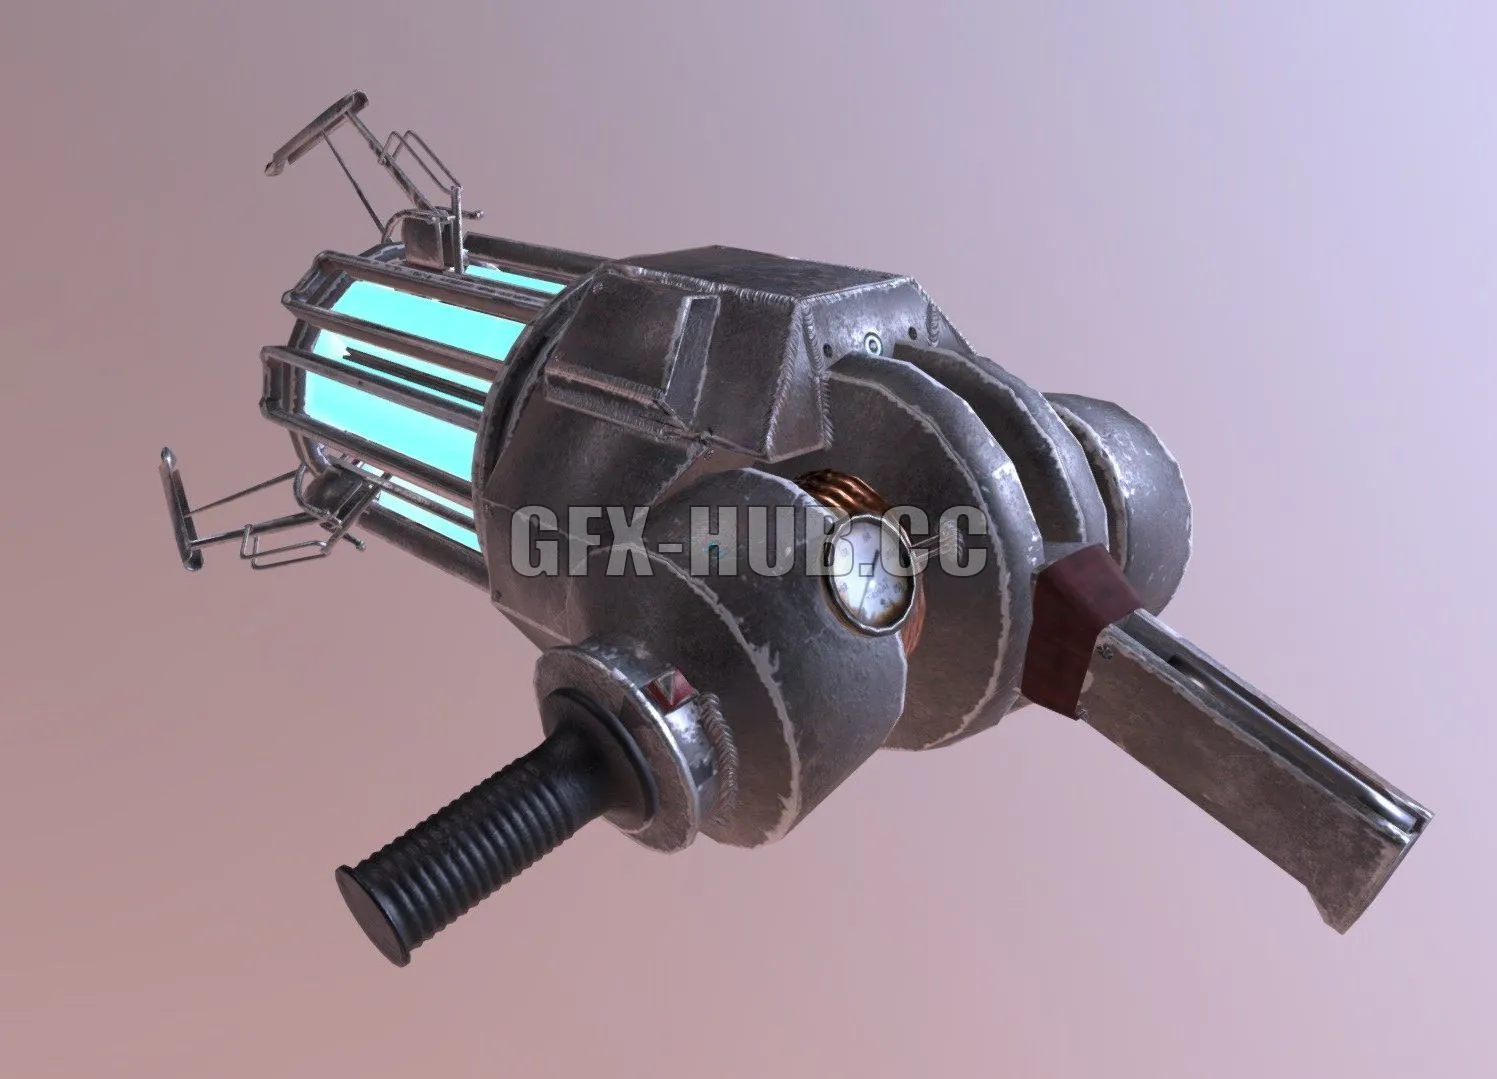 PBR Game 3D Model – Physgun ZPEFM Supercharged Gravity Gun